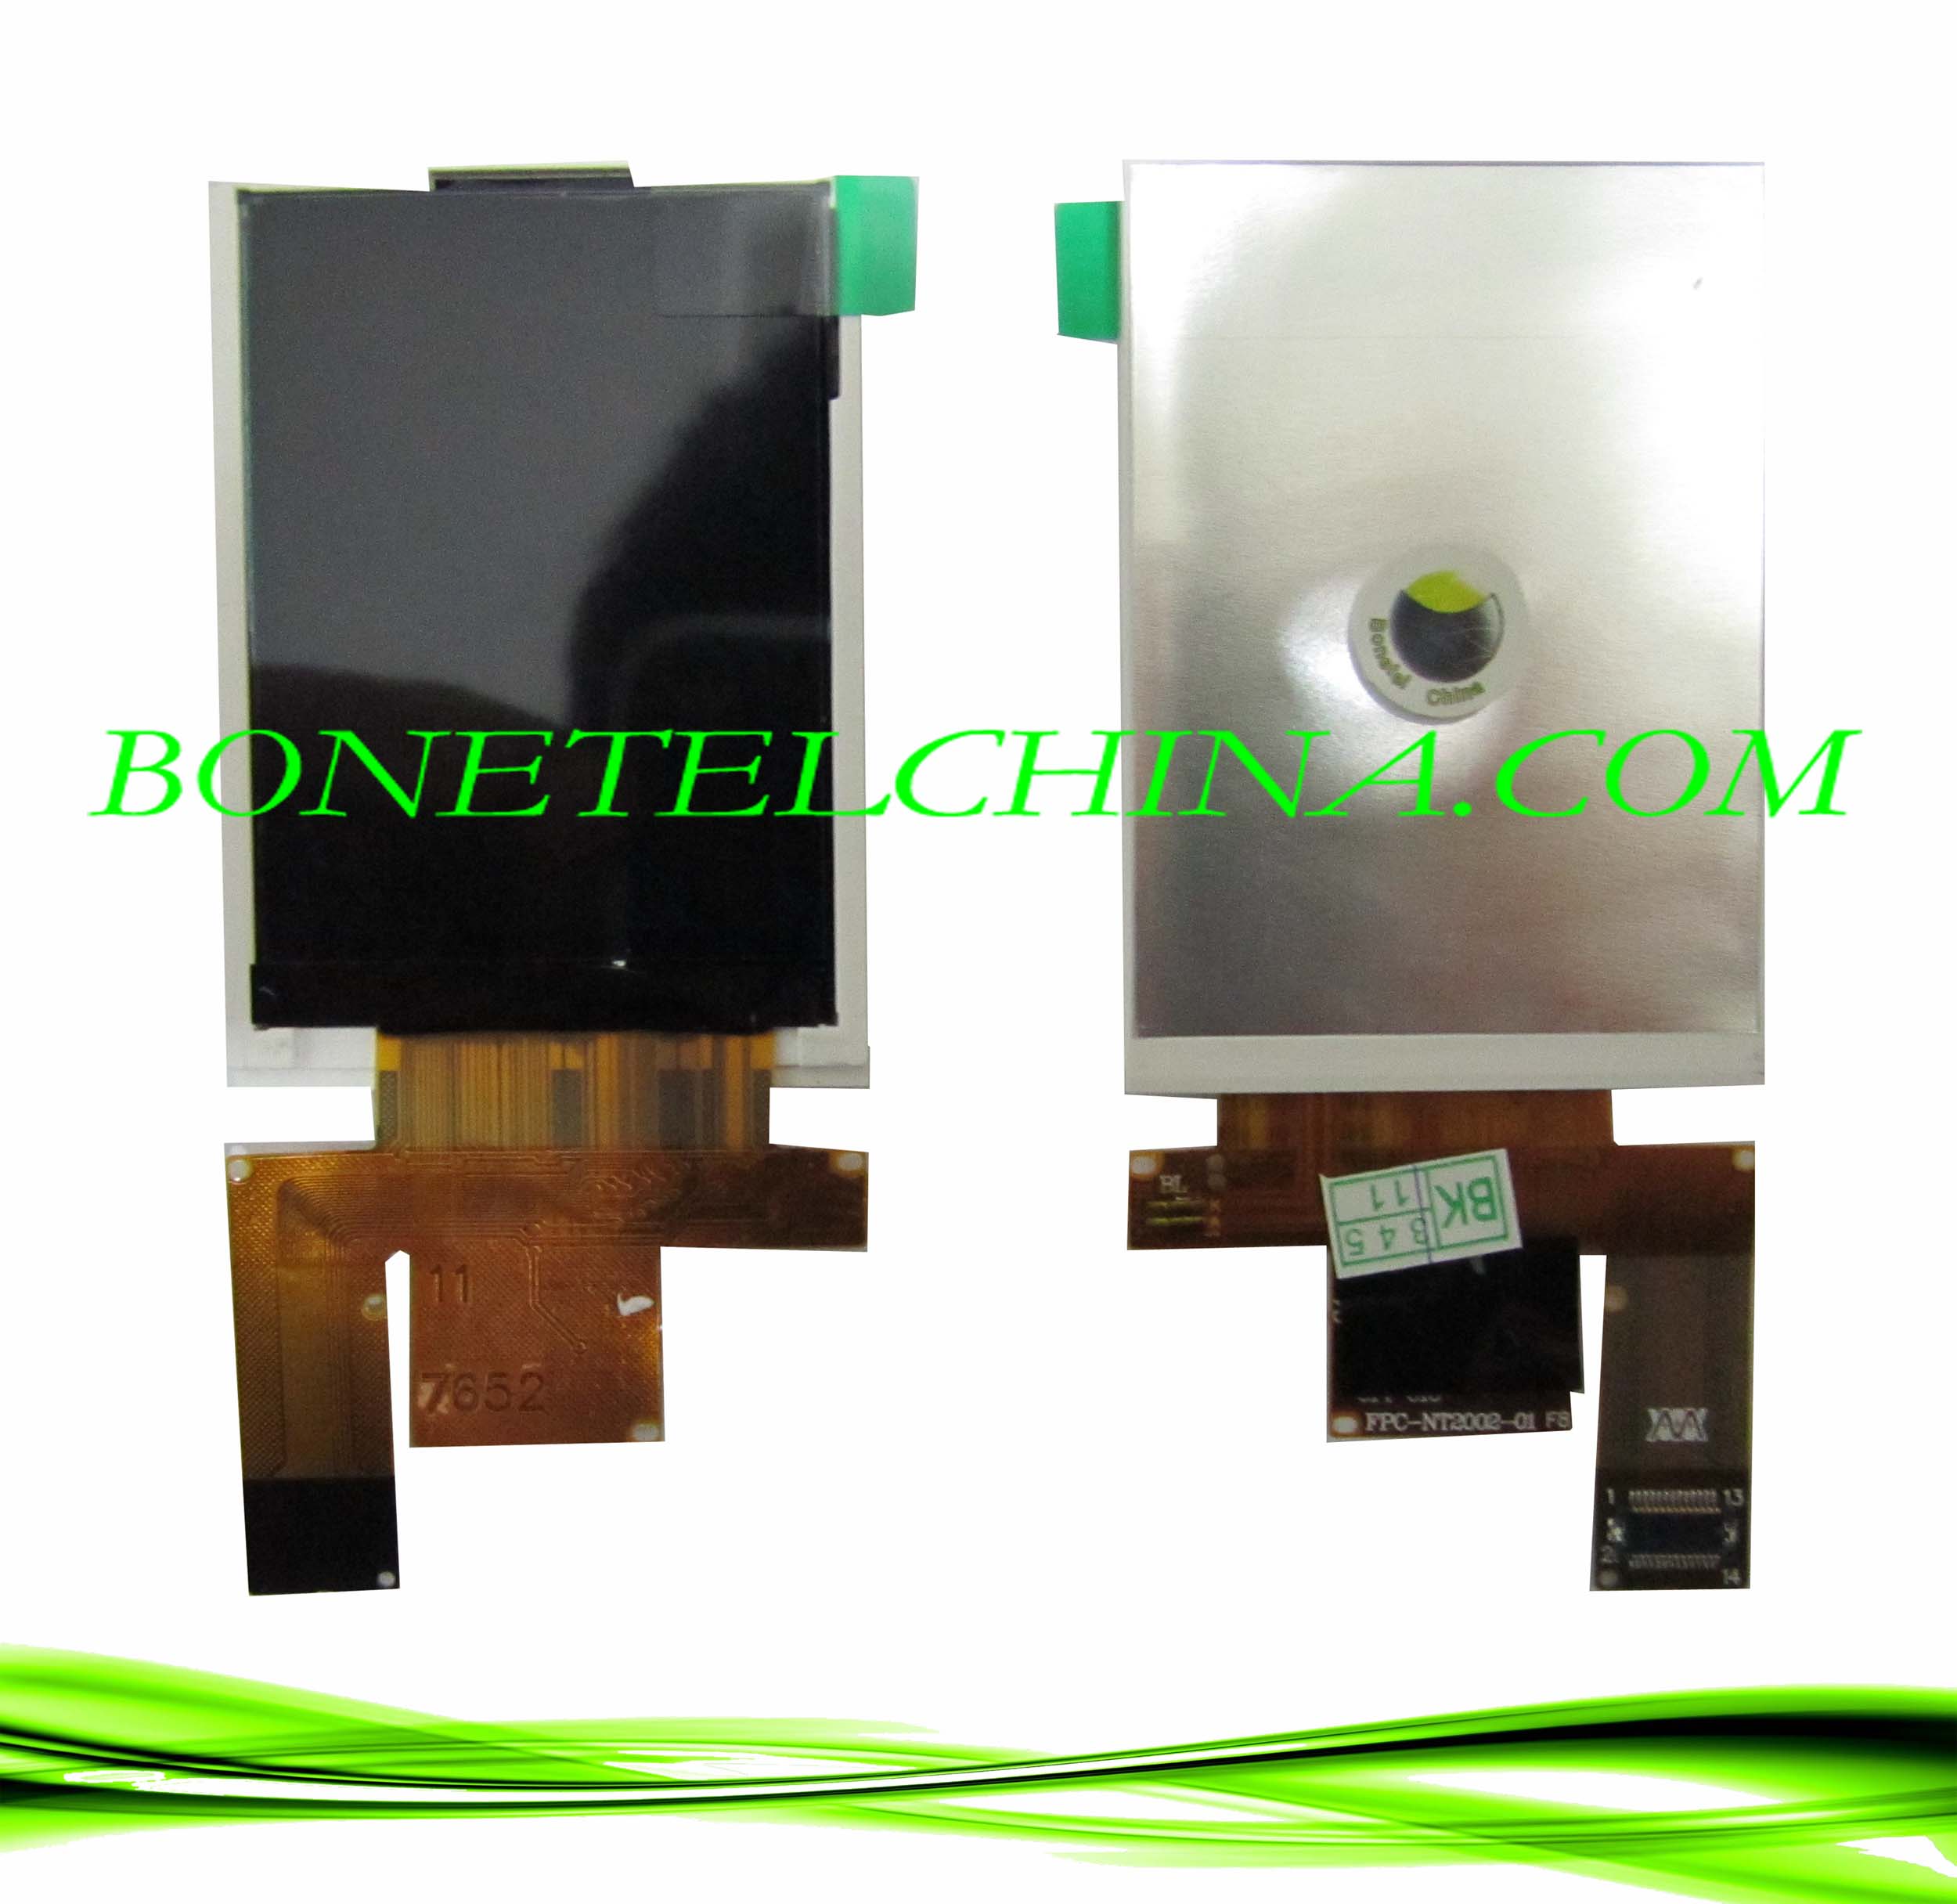 Teléfono Móvil / Celular Pantalla LCD para Sony Ericsson K790/K800/W850/W830 (BON -LCD- K790 )